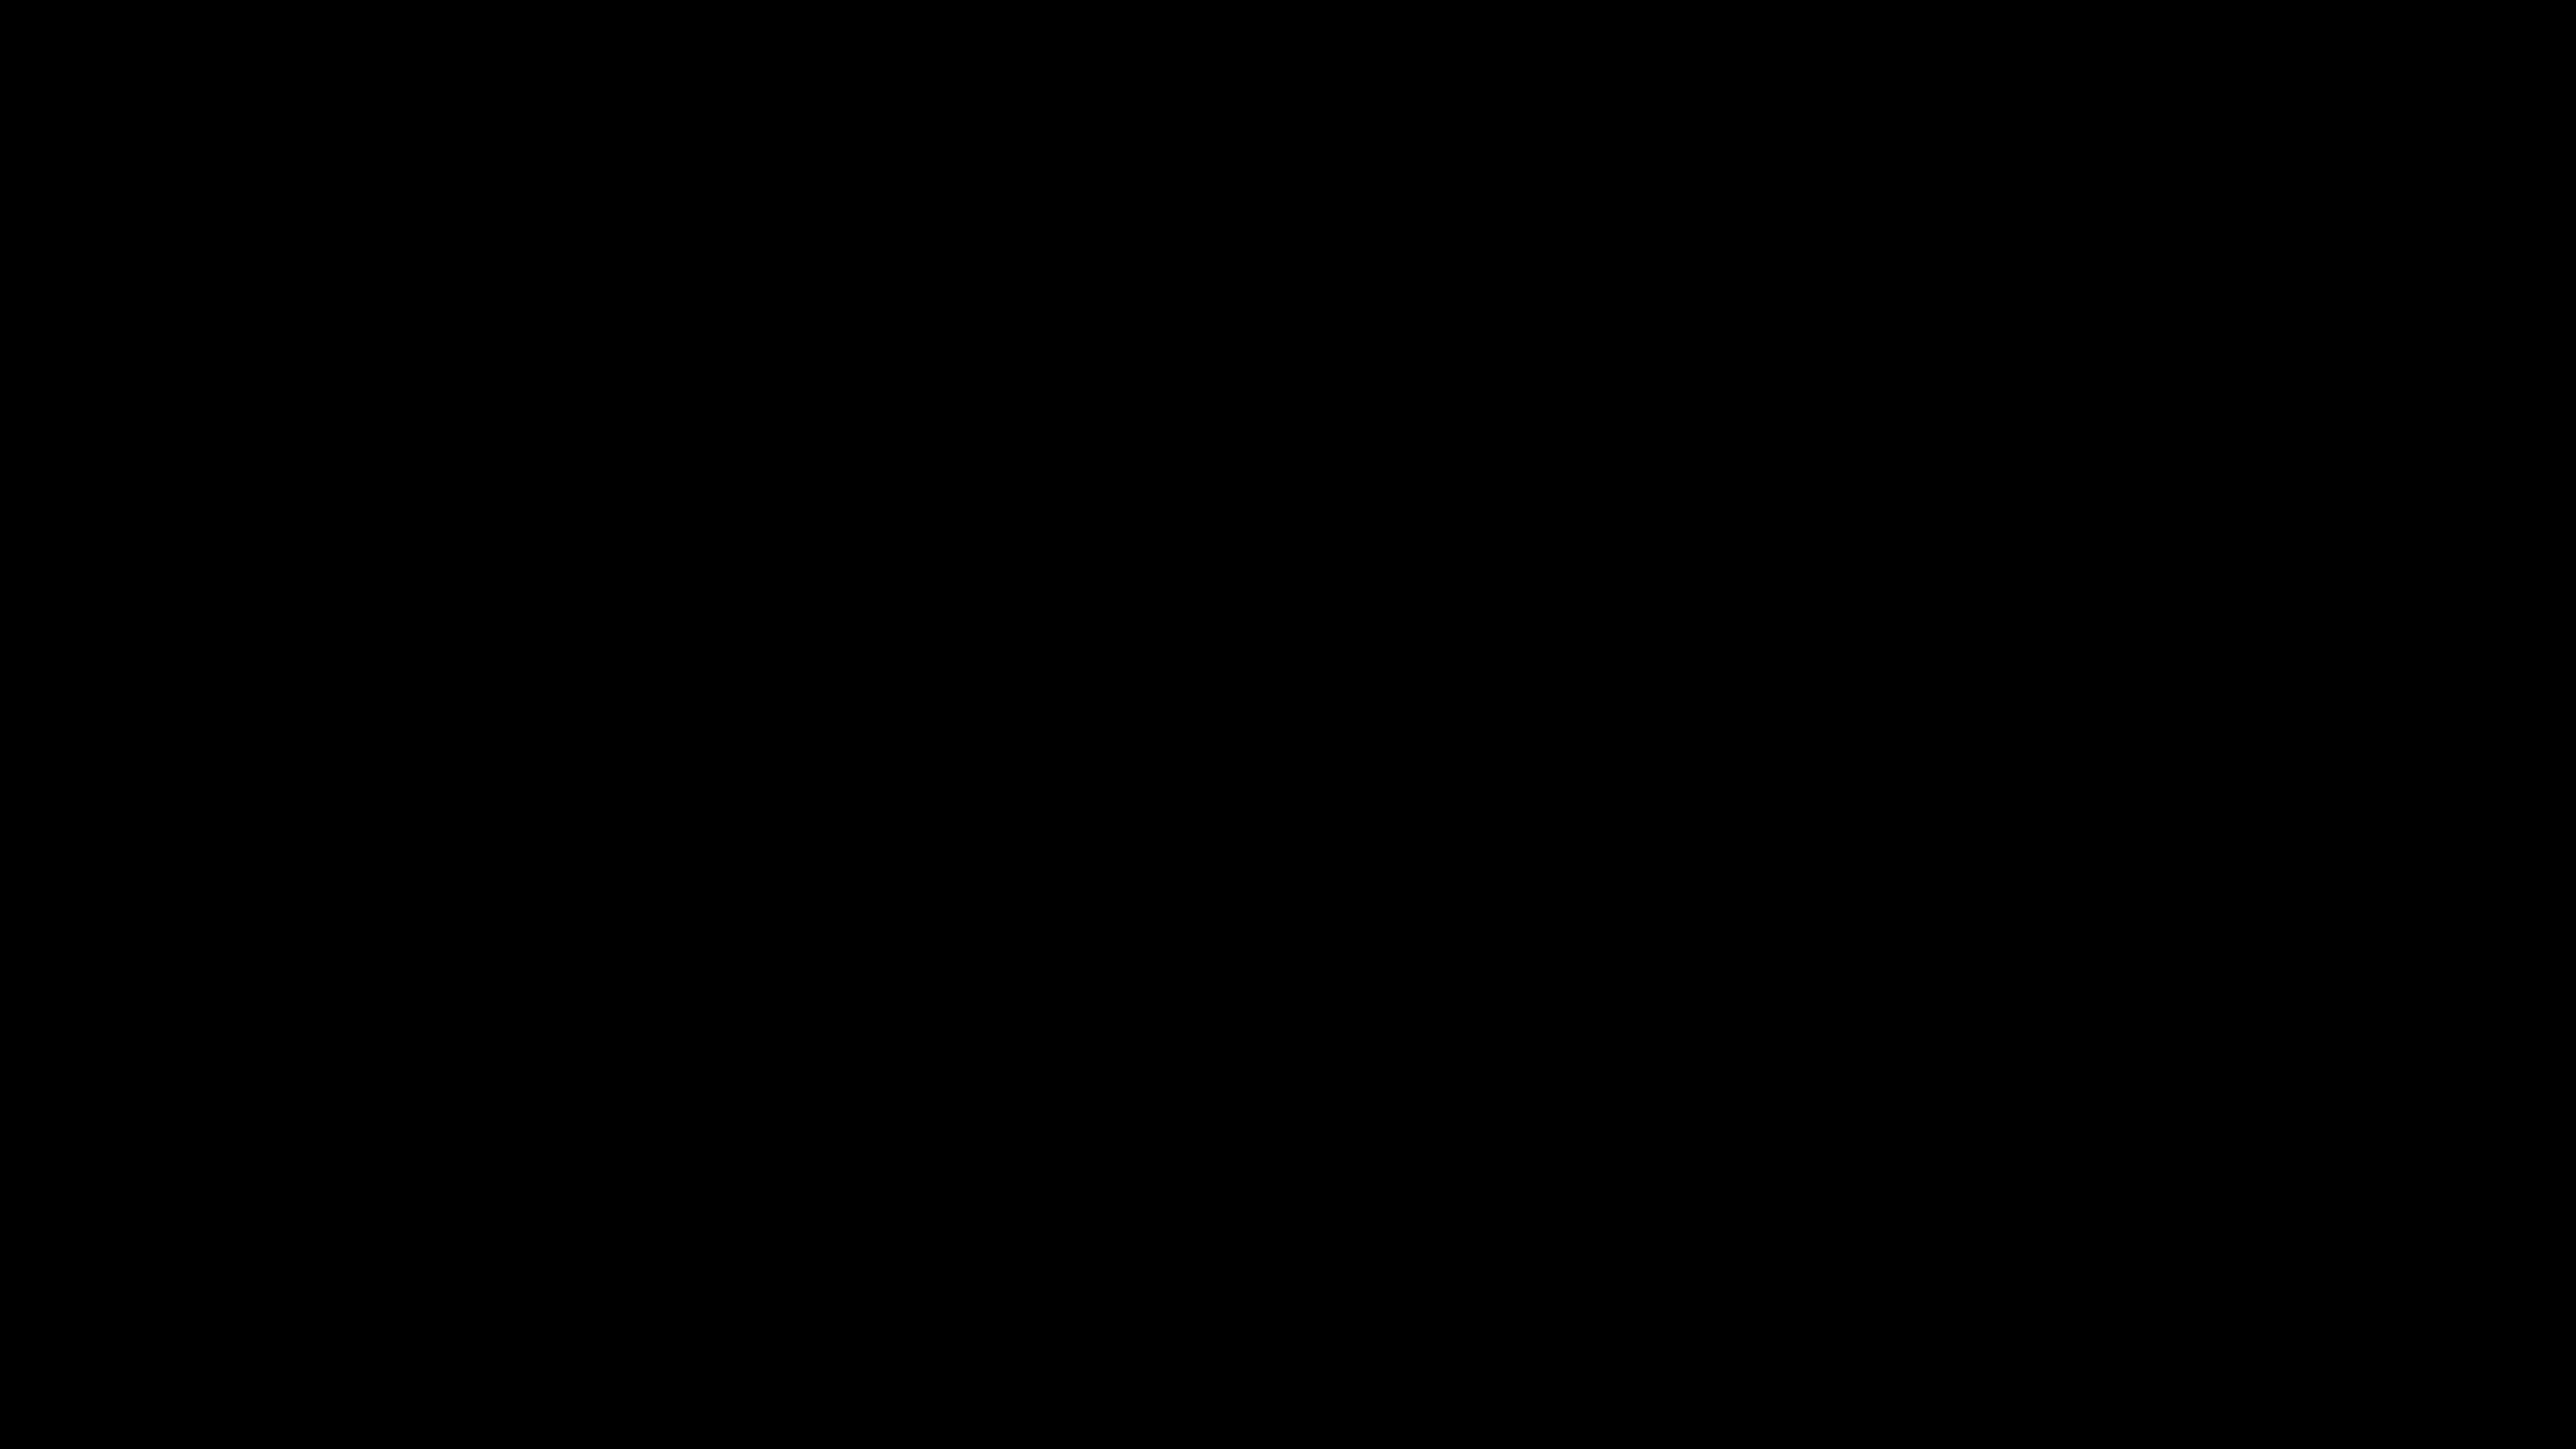 ffPro logo animation